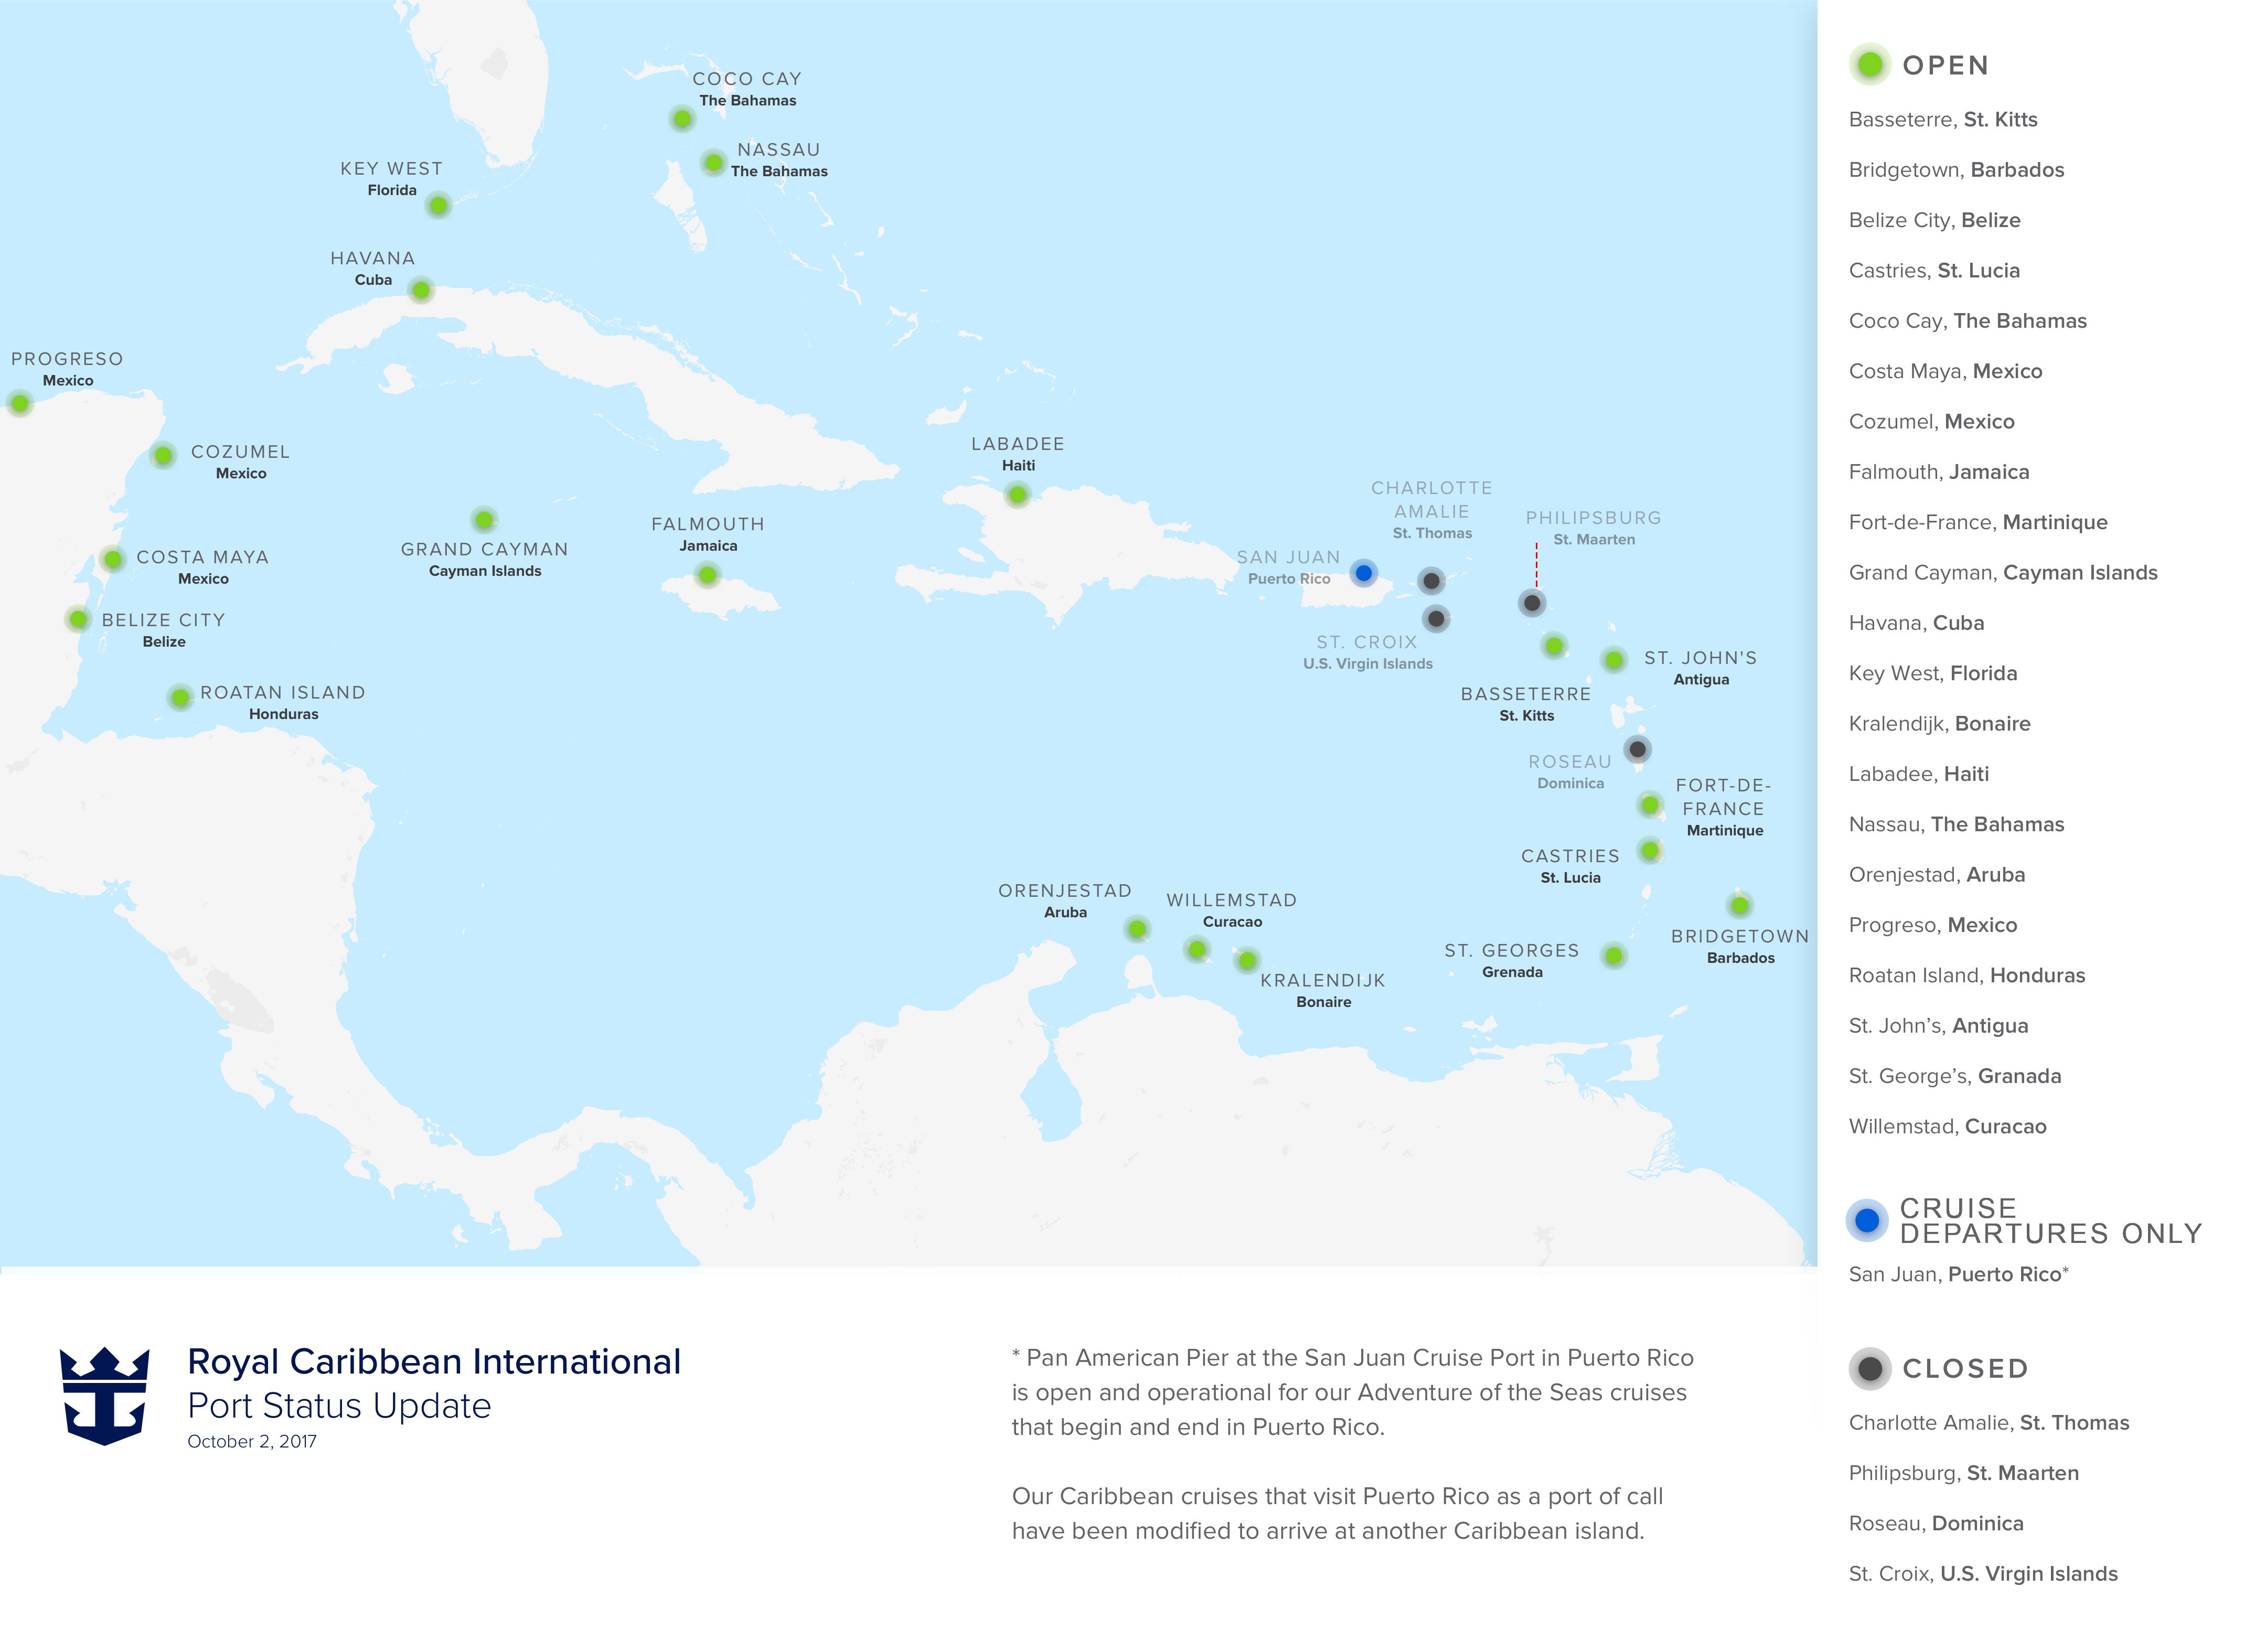 Royal Caribbean releases port status update following hurricanes